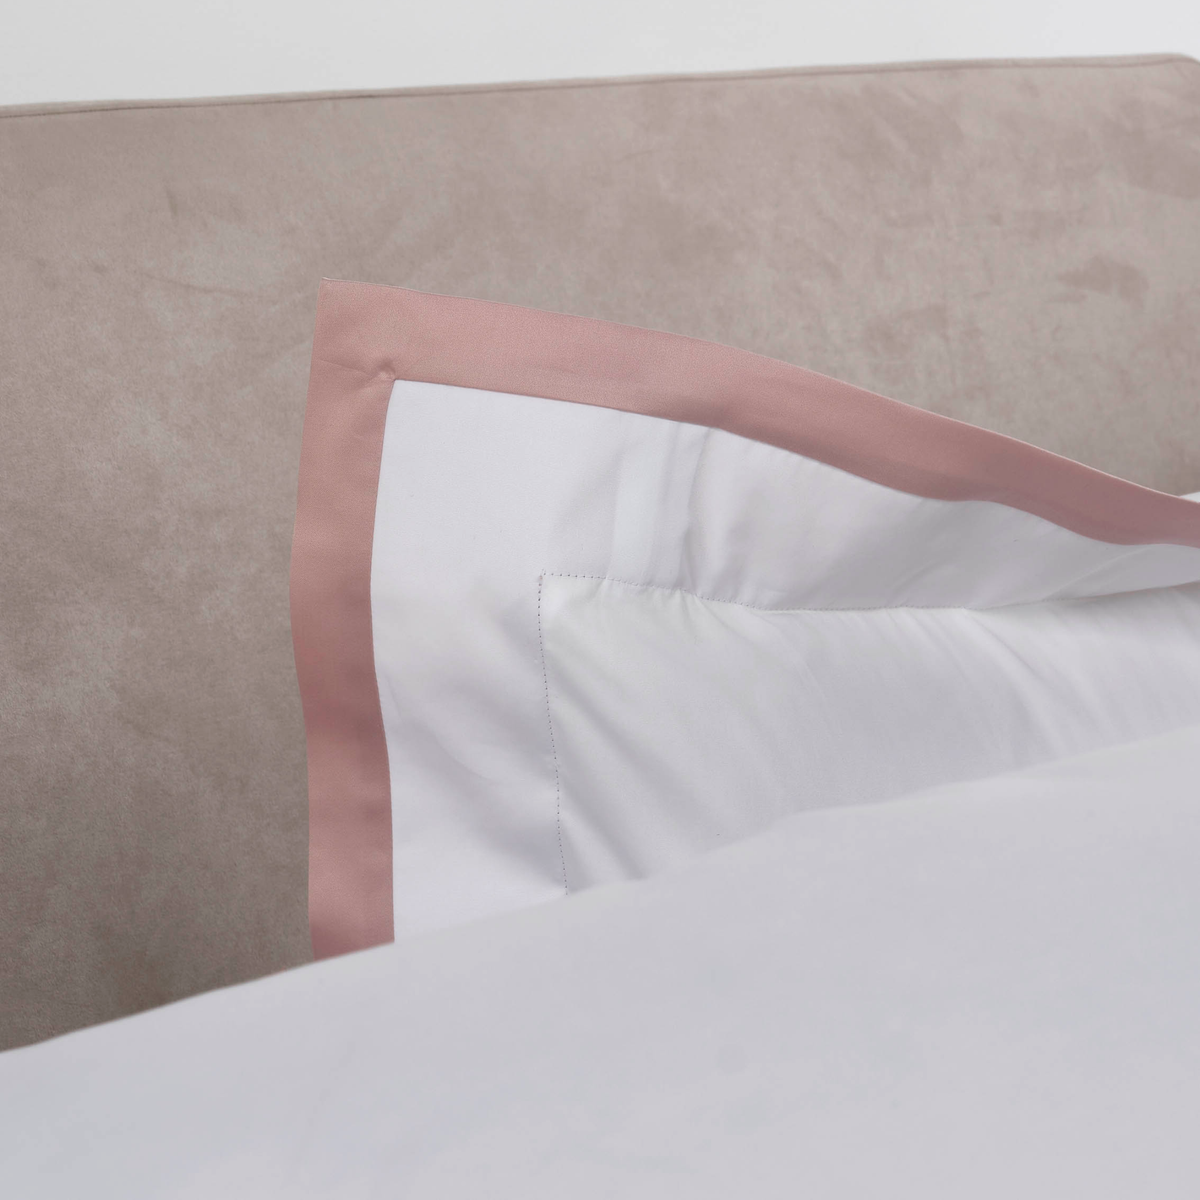 Pillow Flange of Celso de Lemos Hella Bedding in Nuage Rose Color